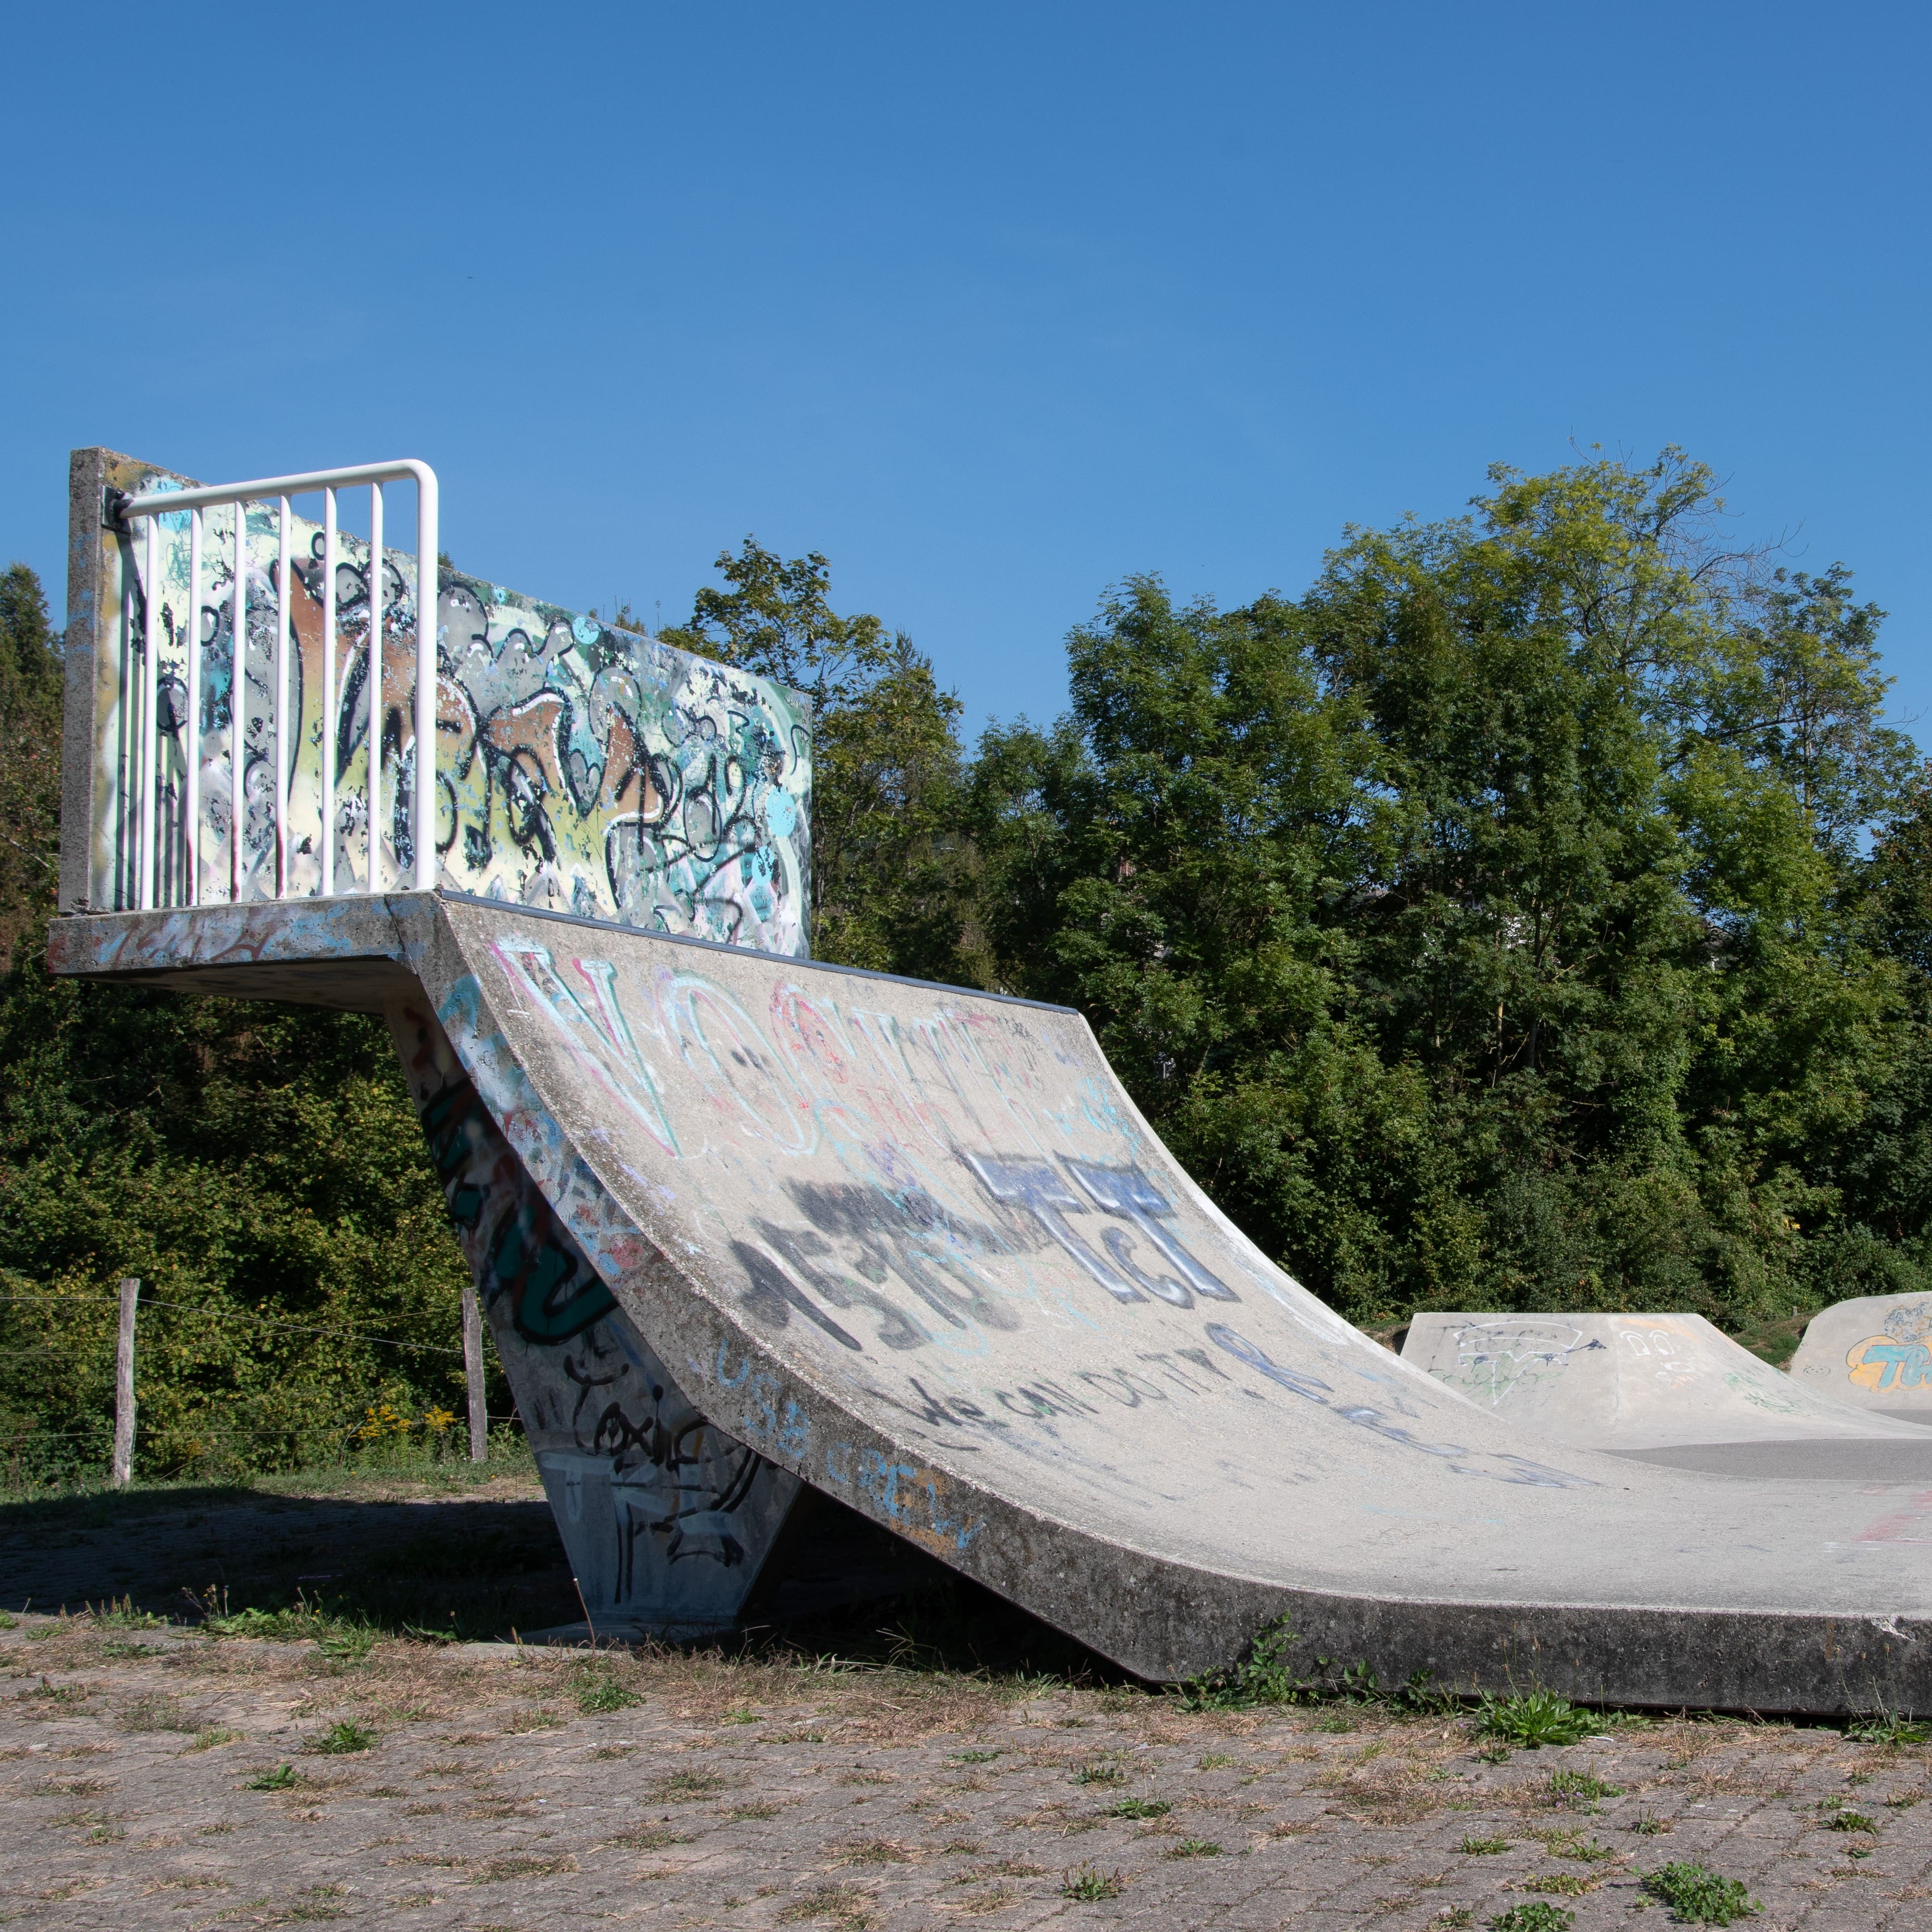 Le Skatepark